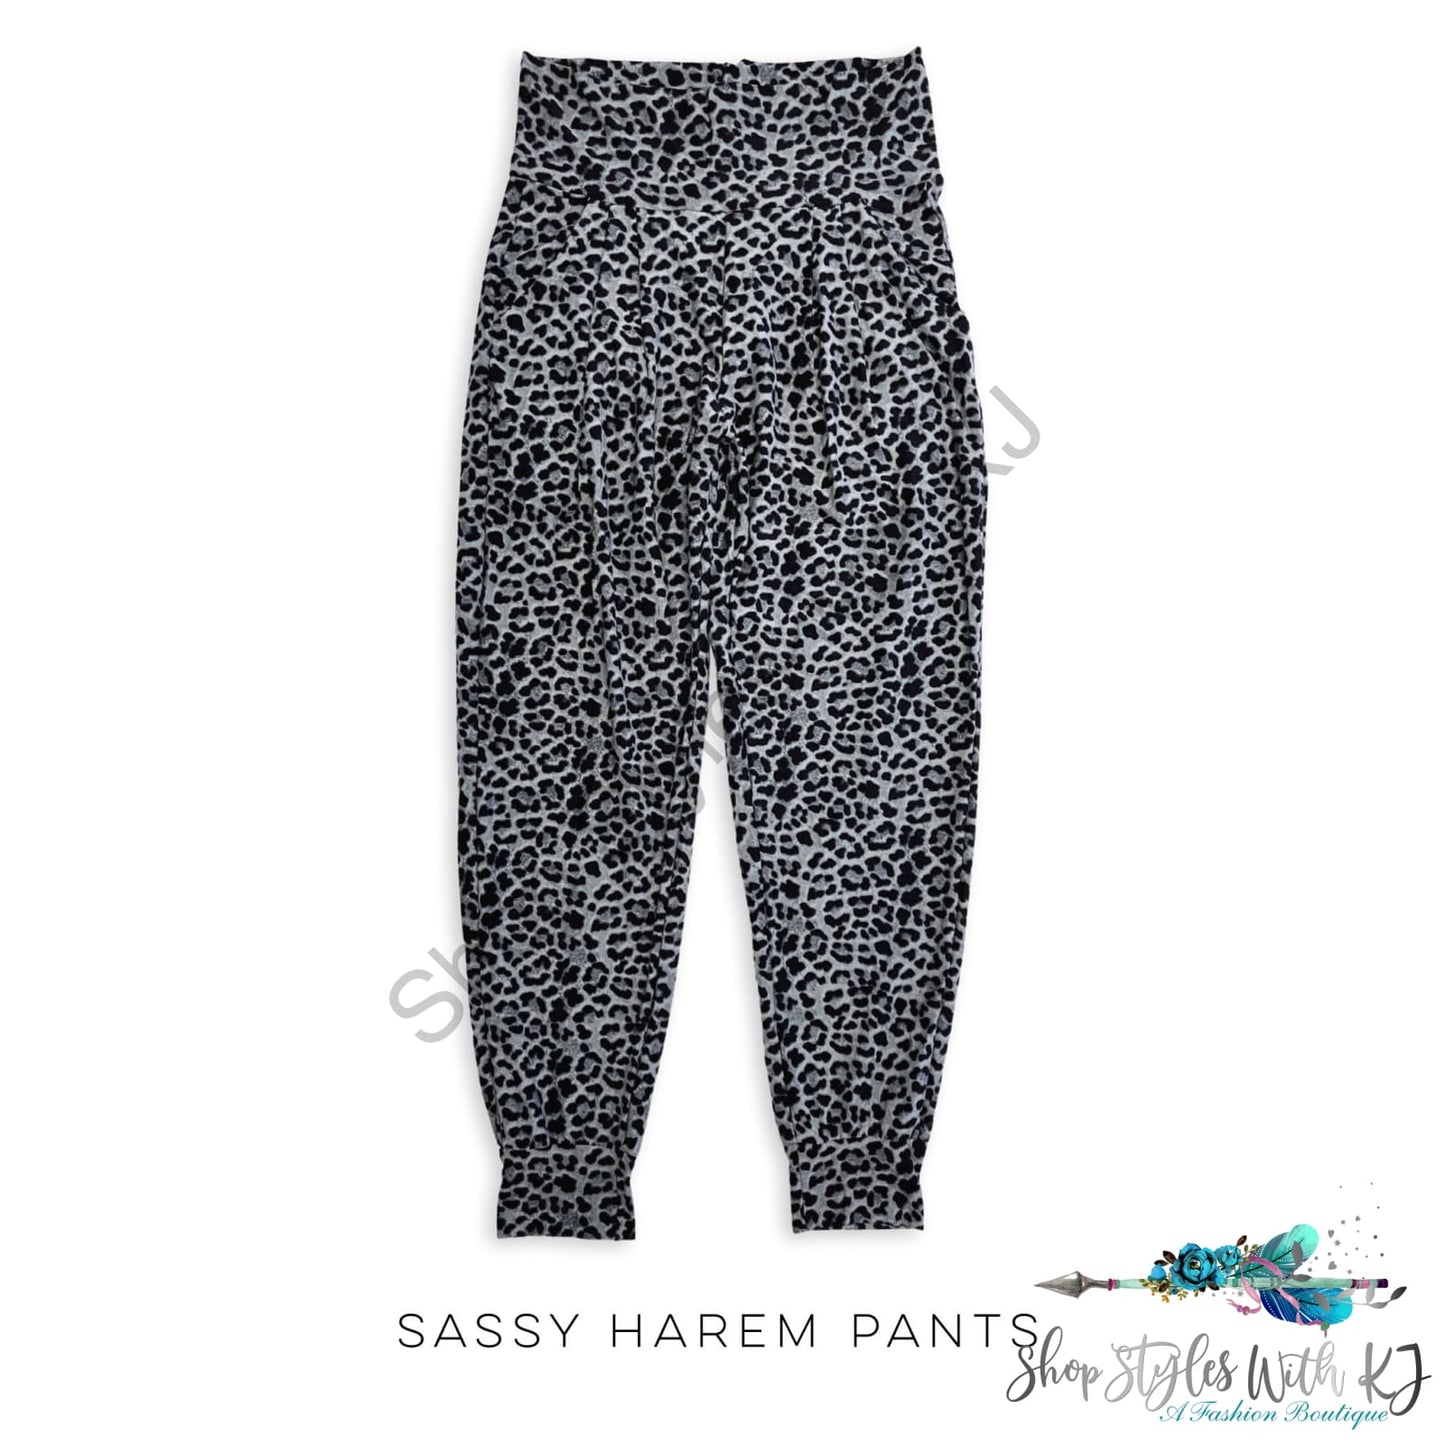 Sassy Harem Pants Boutique Only